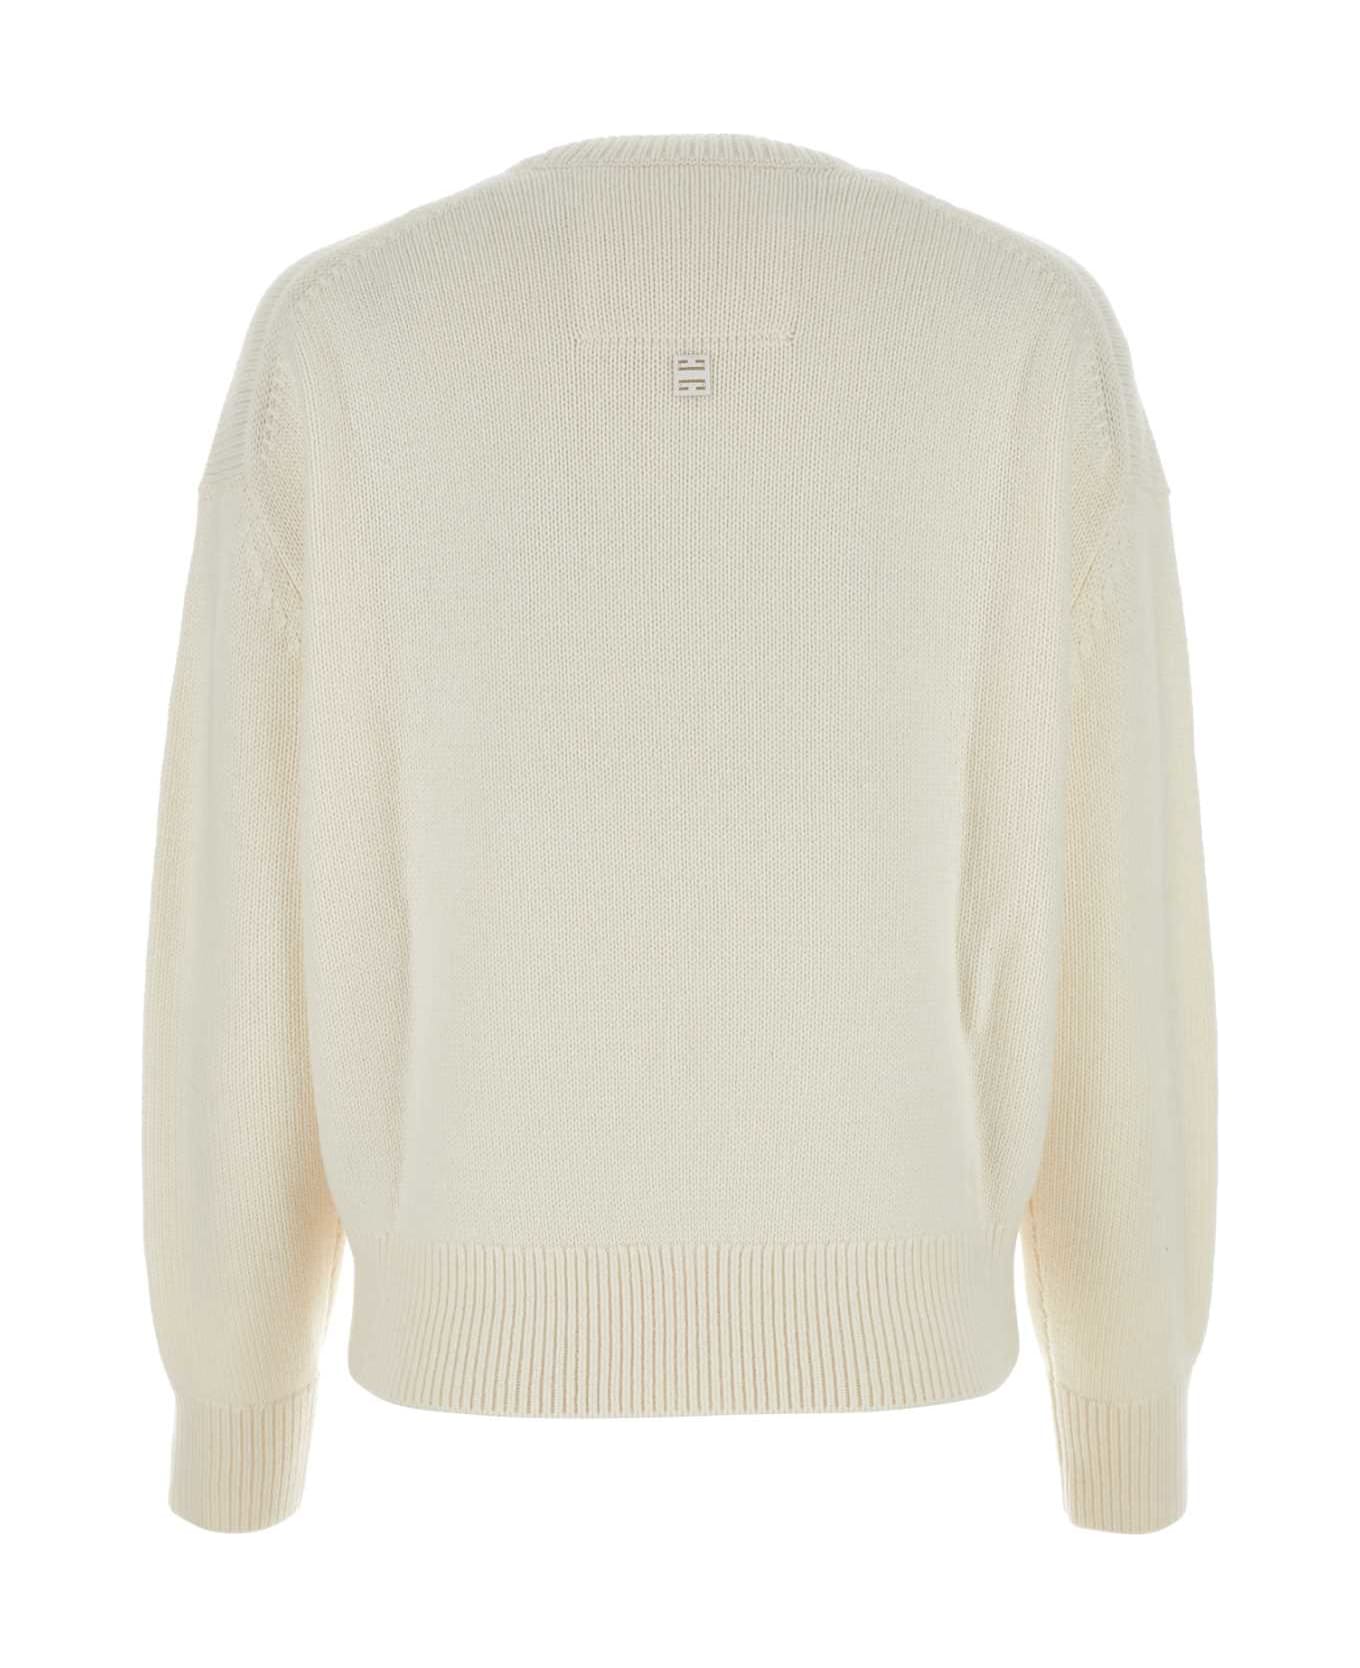 Givenchy Ivory Cashmere Sweater - IVORY